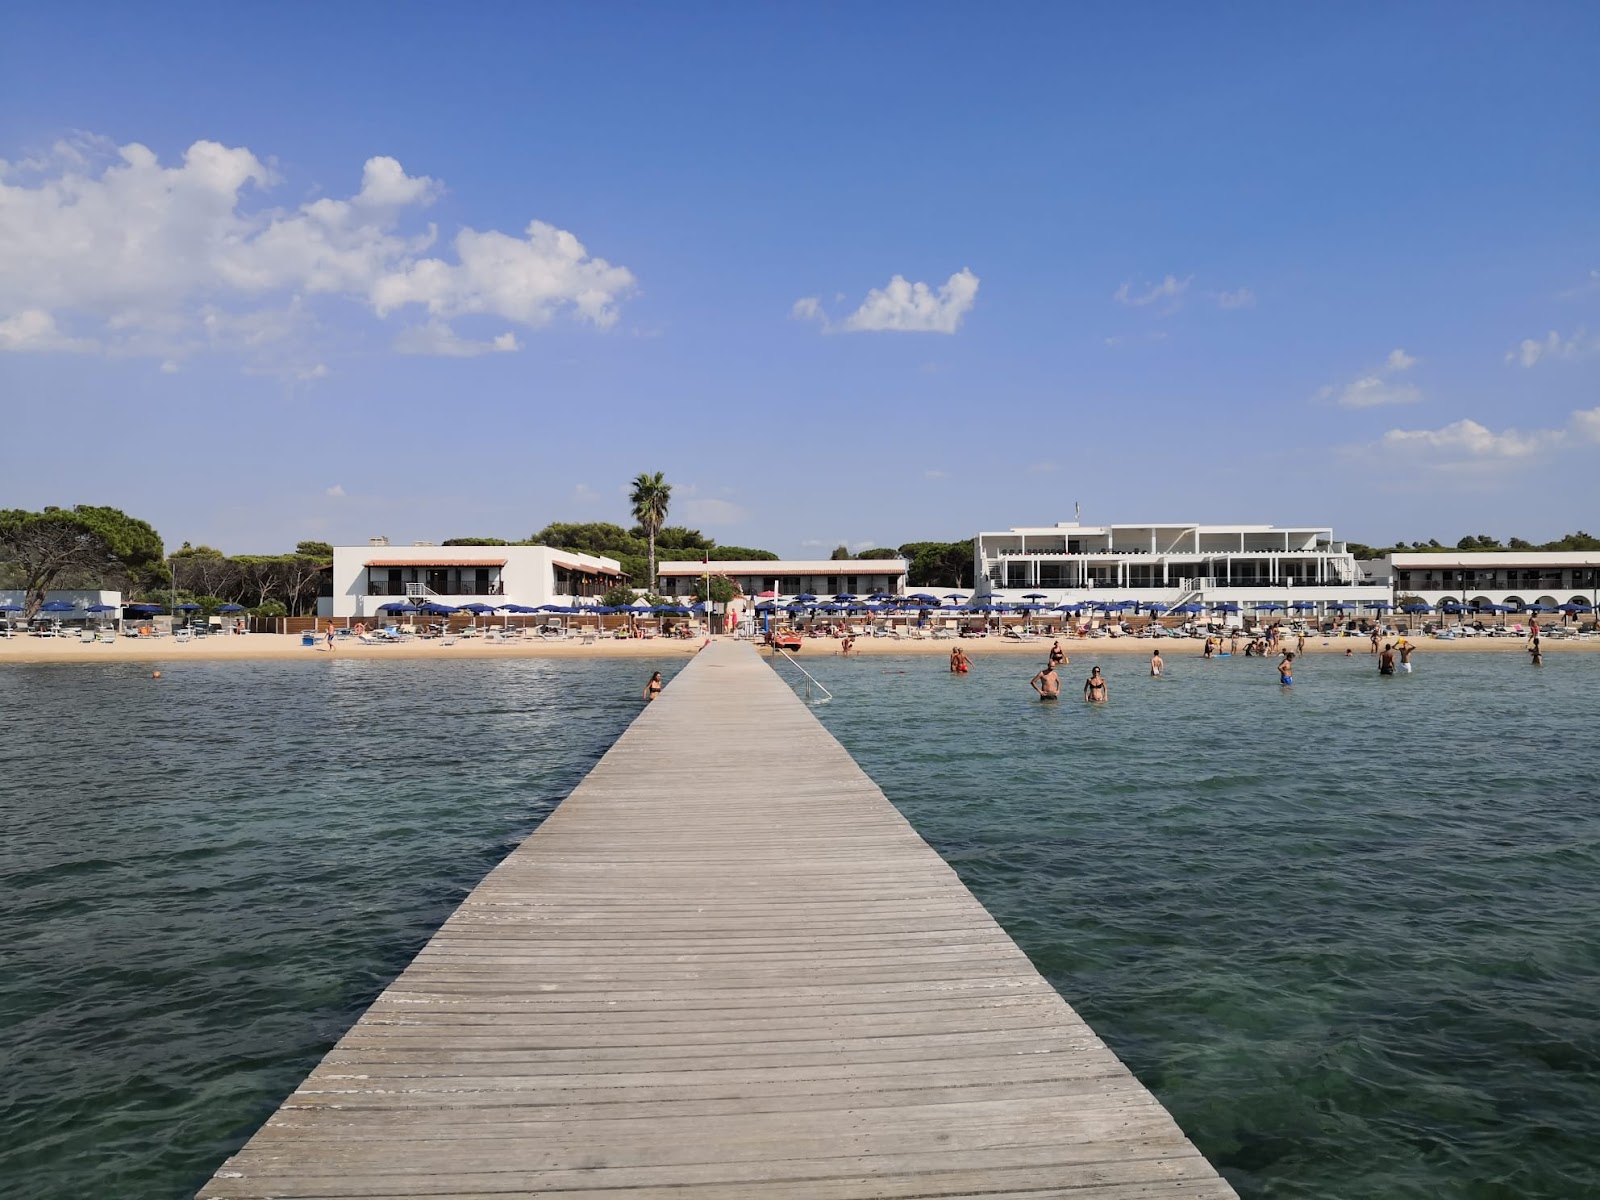 Spiaggia di Maristella'in fotoğrafı mavi saf su yüzey ile